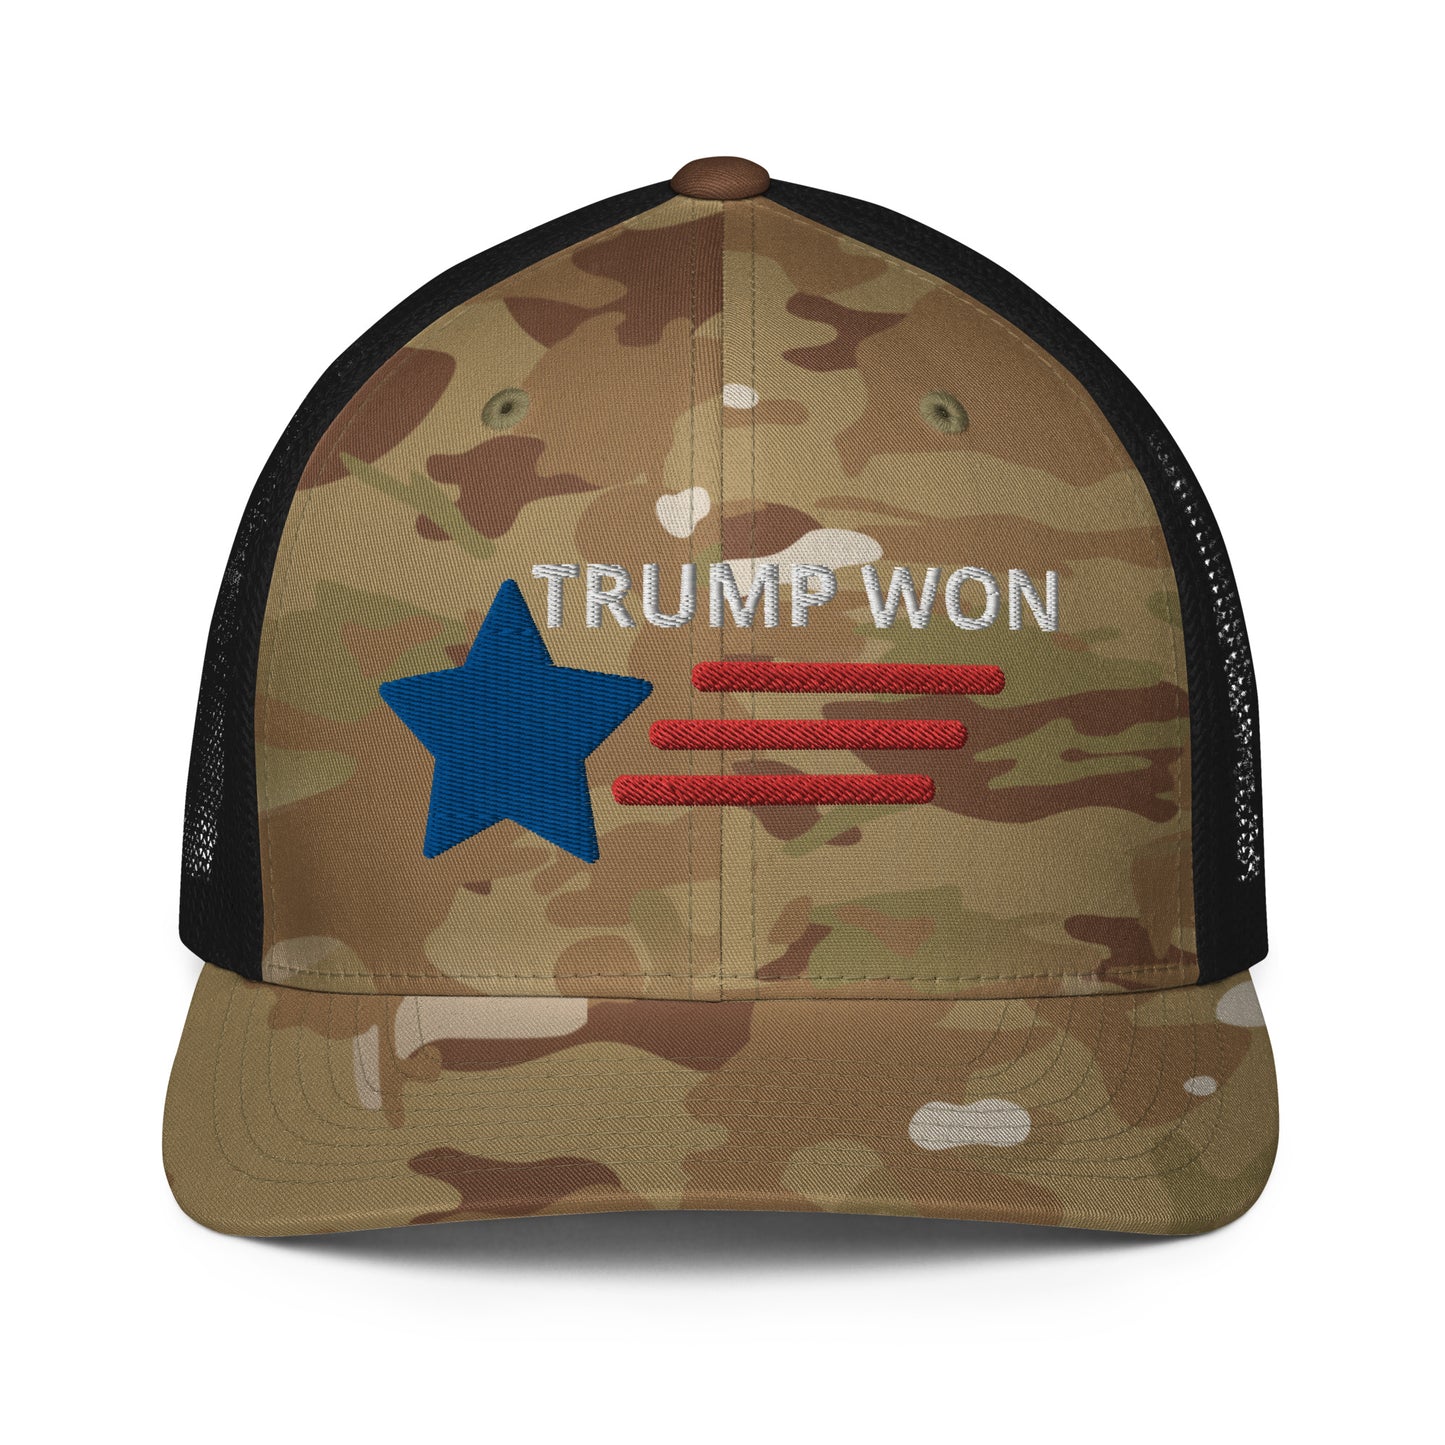 TRUMP WON 2020 Election Closed-back trucker cap